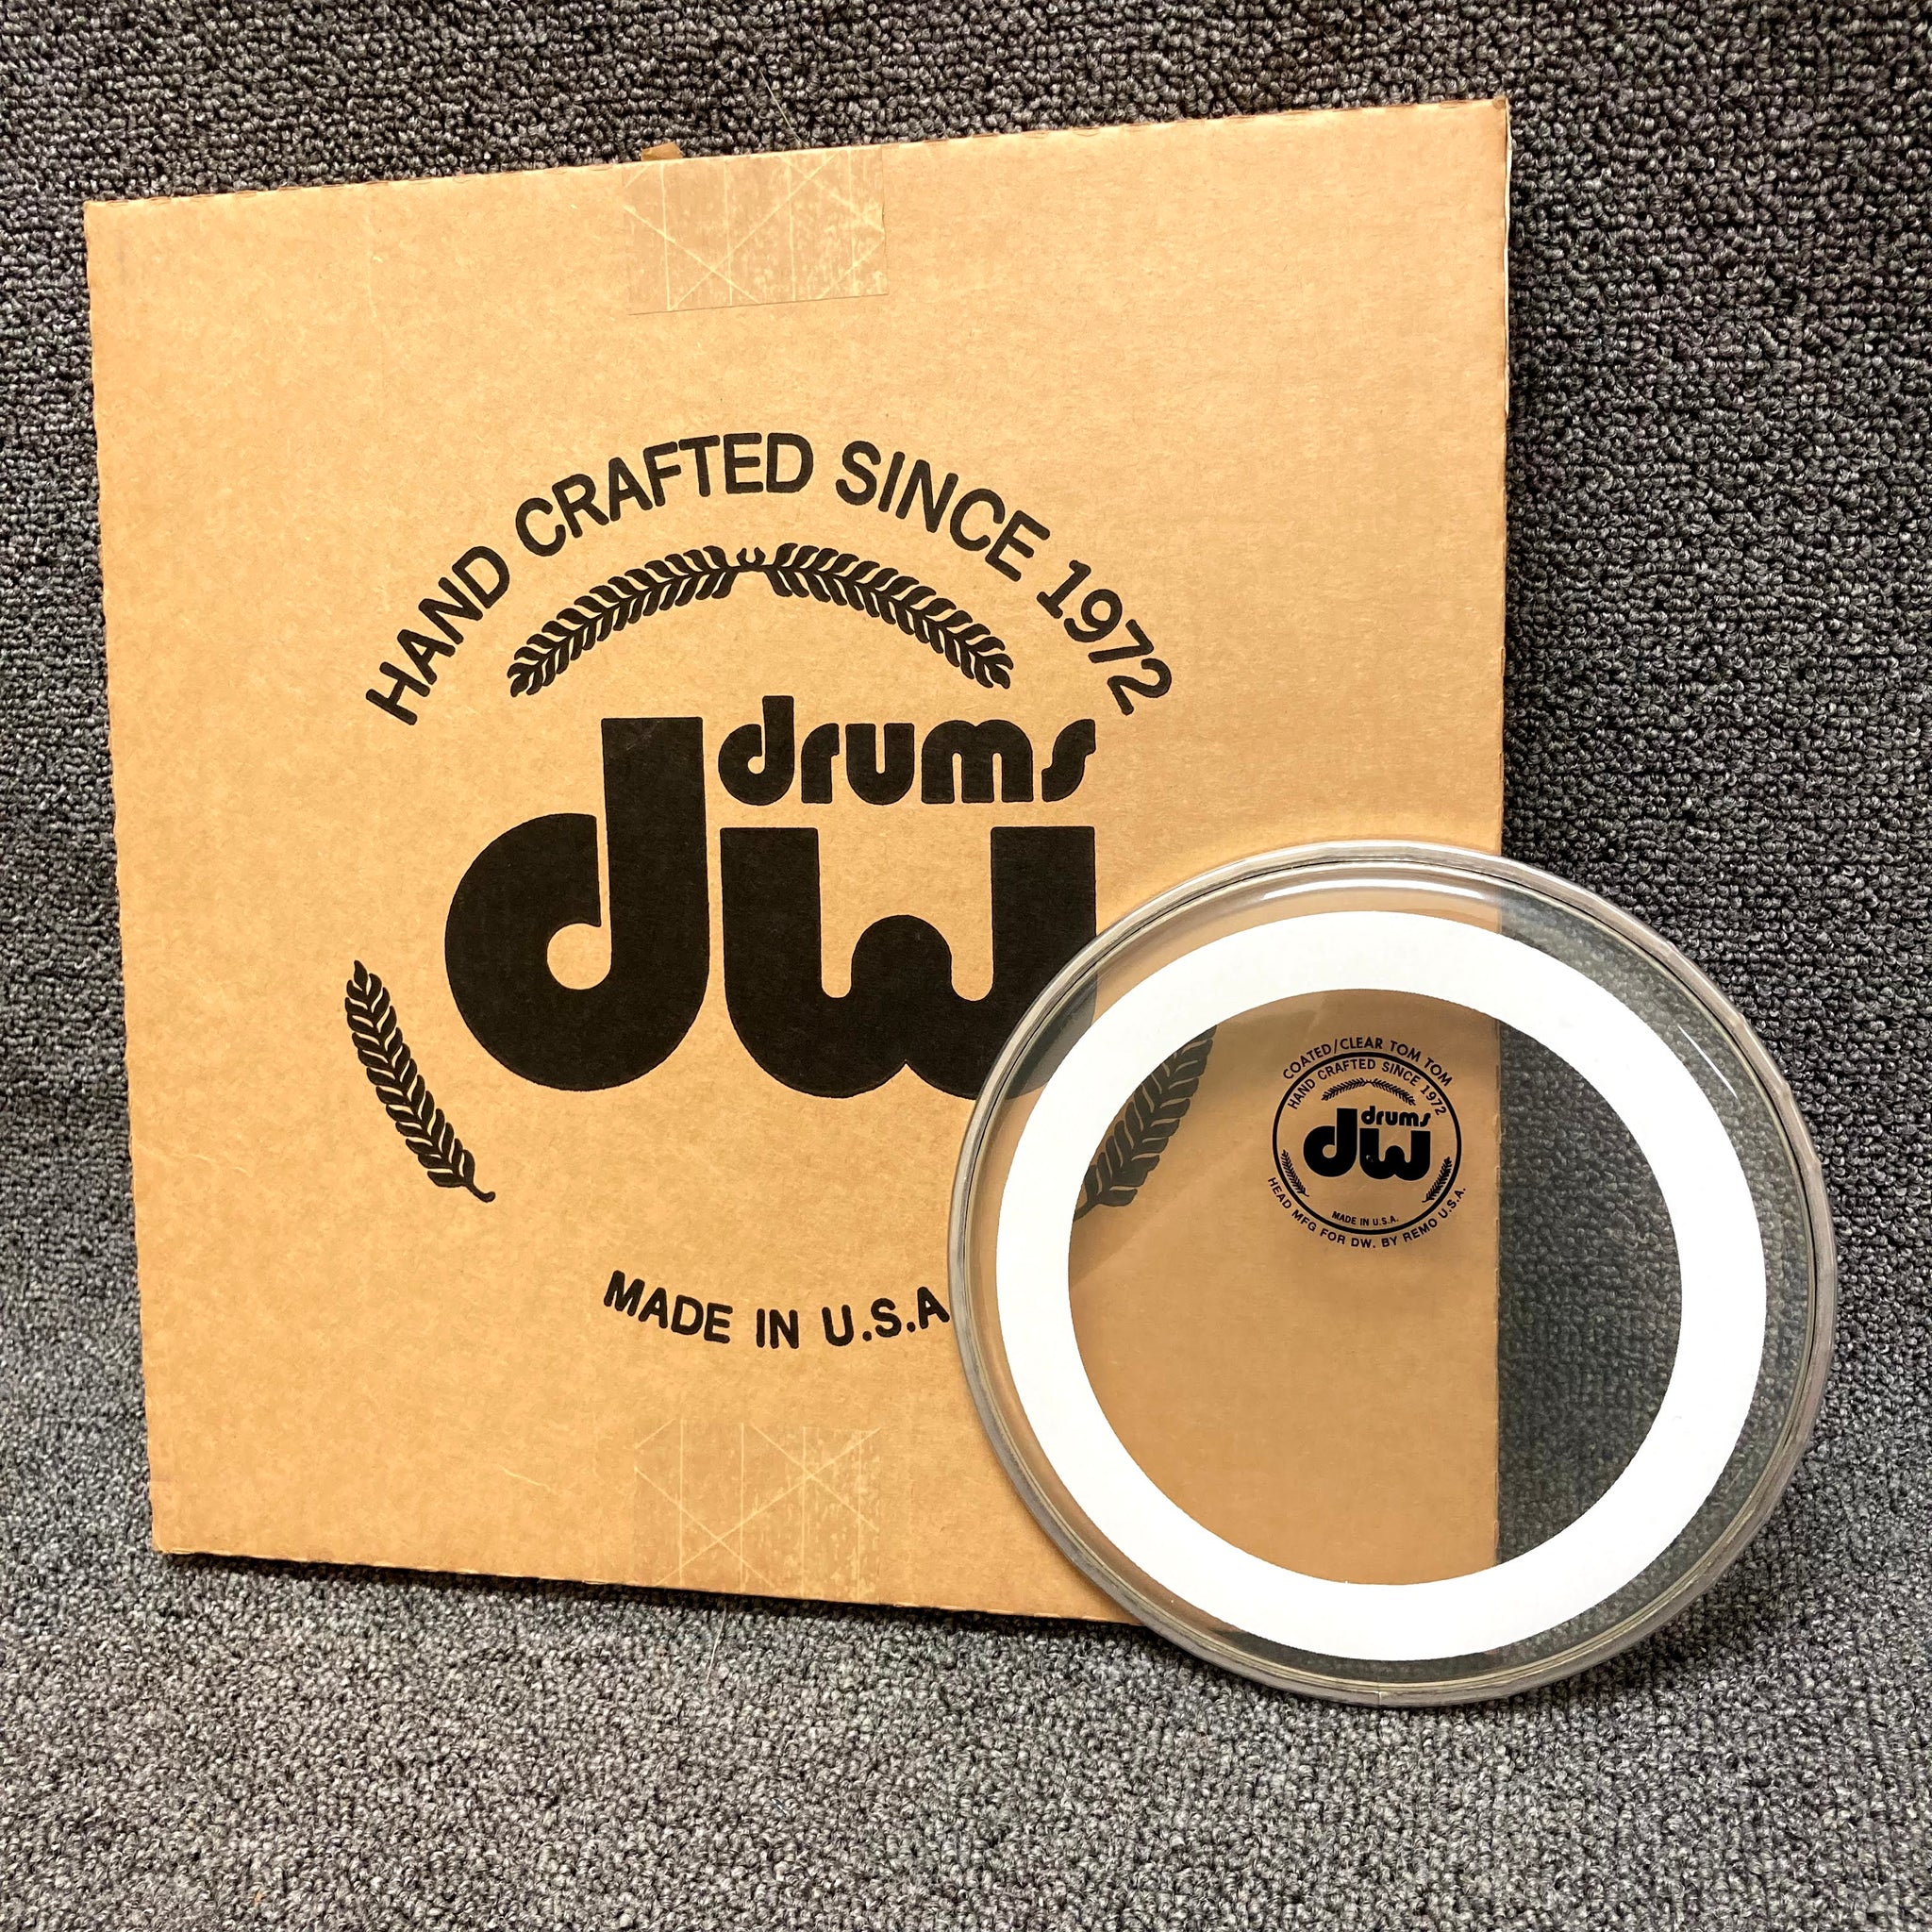 dw drums logo vector